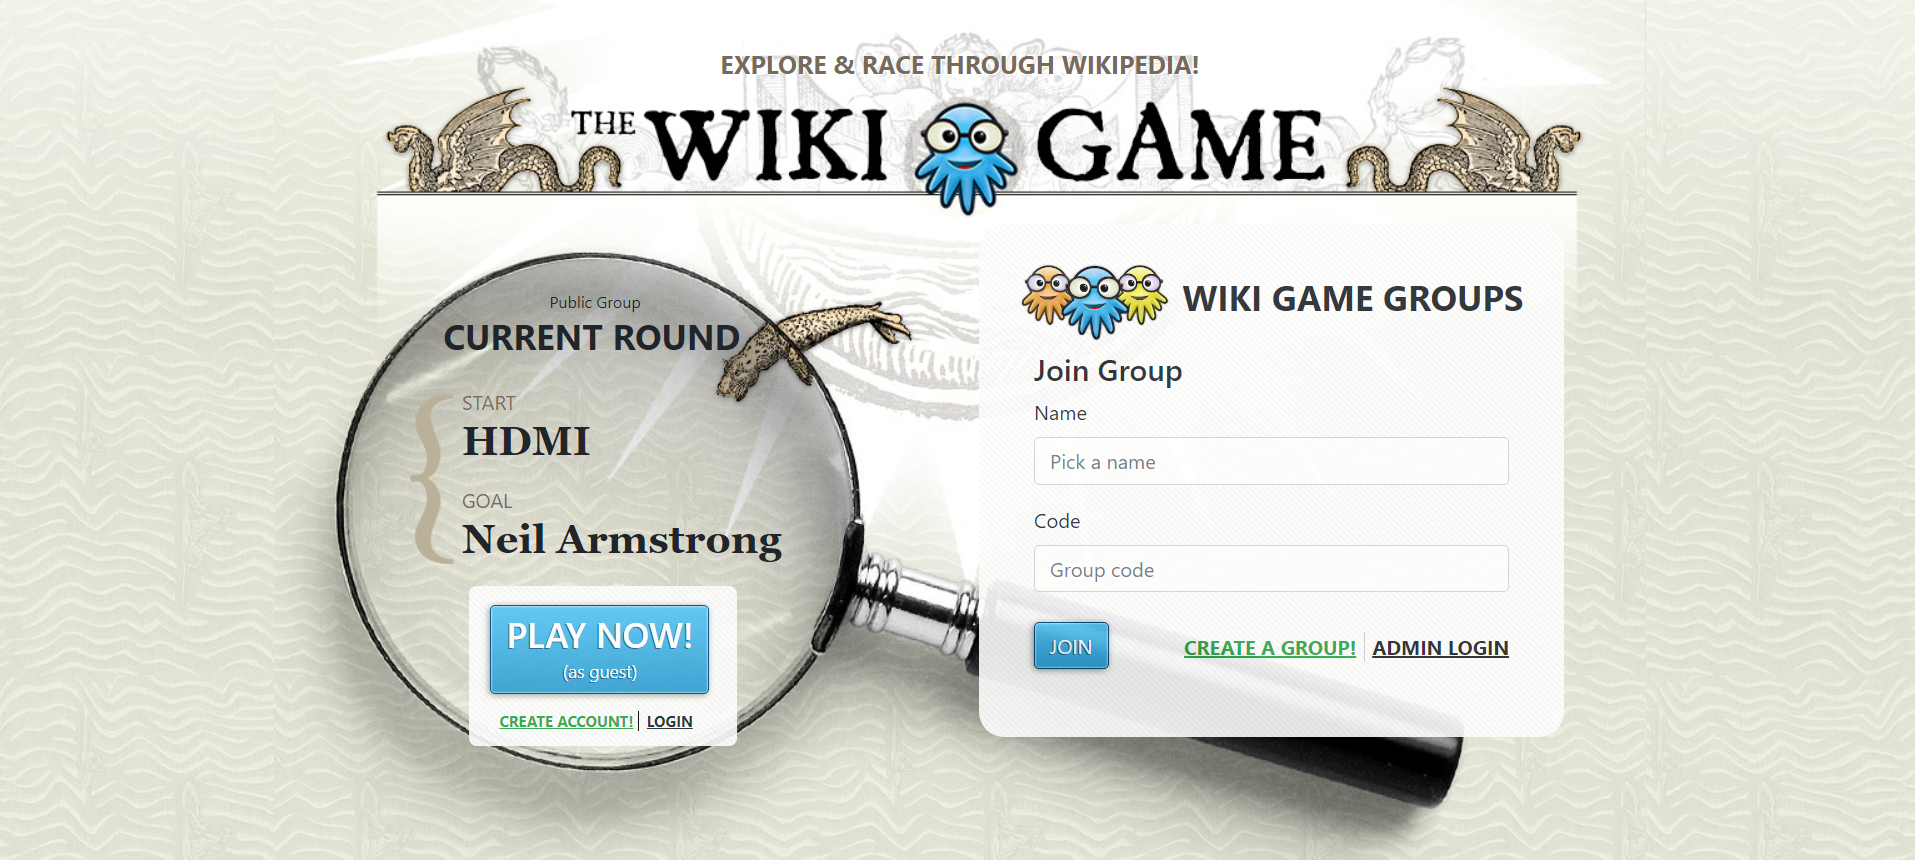 Browser game - Wikipedia